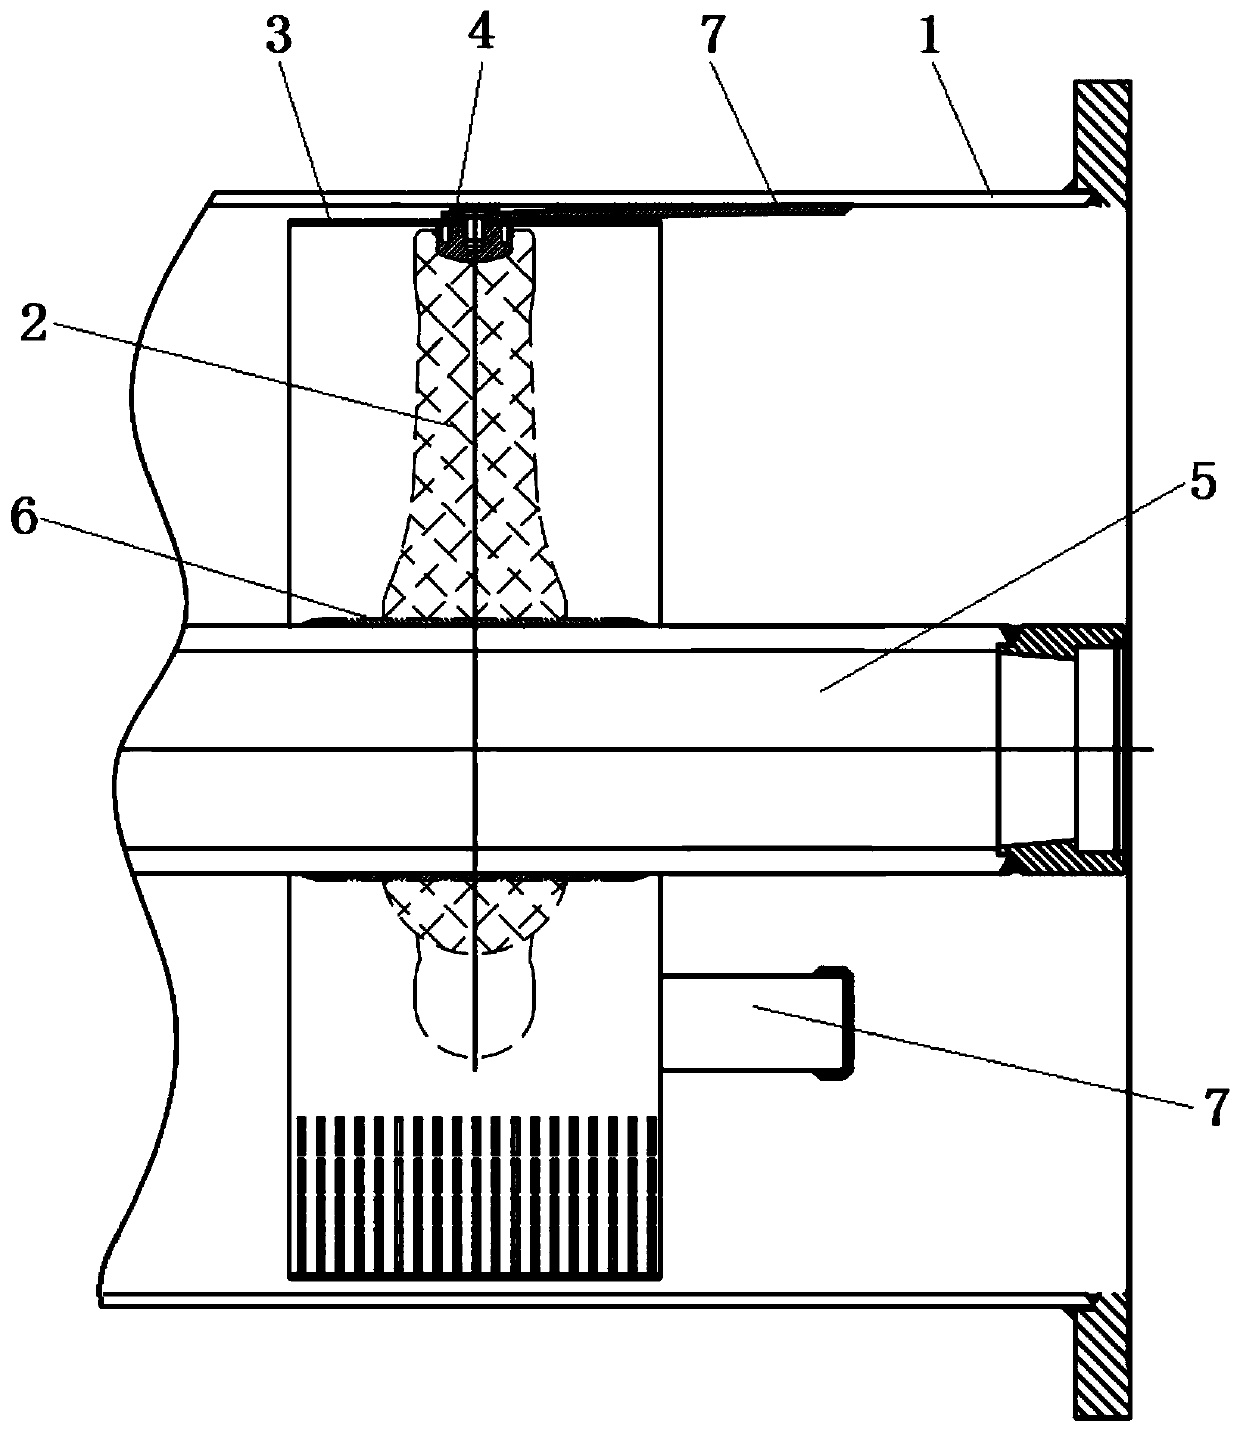 Three-post insulator of GIL